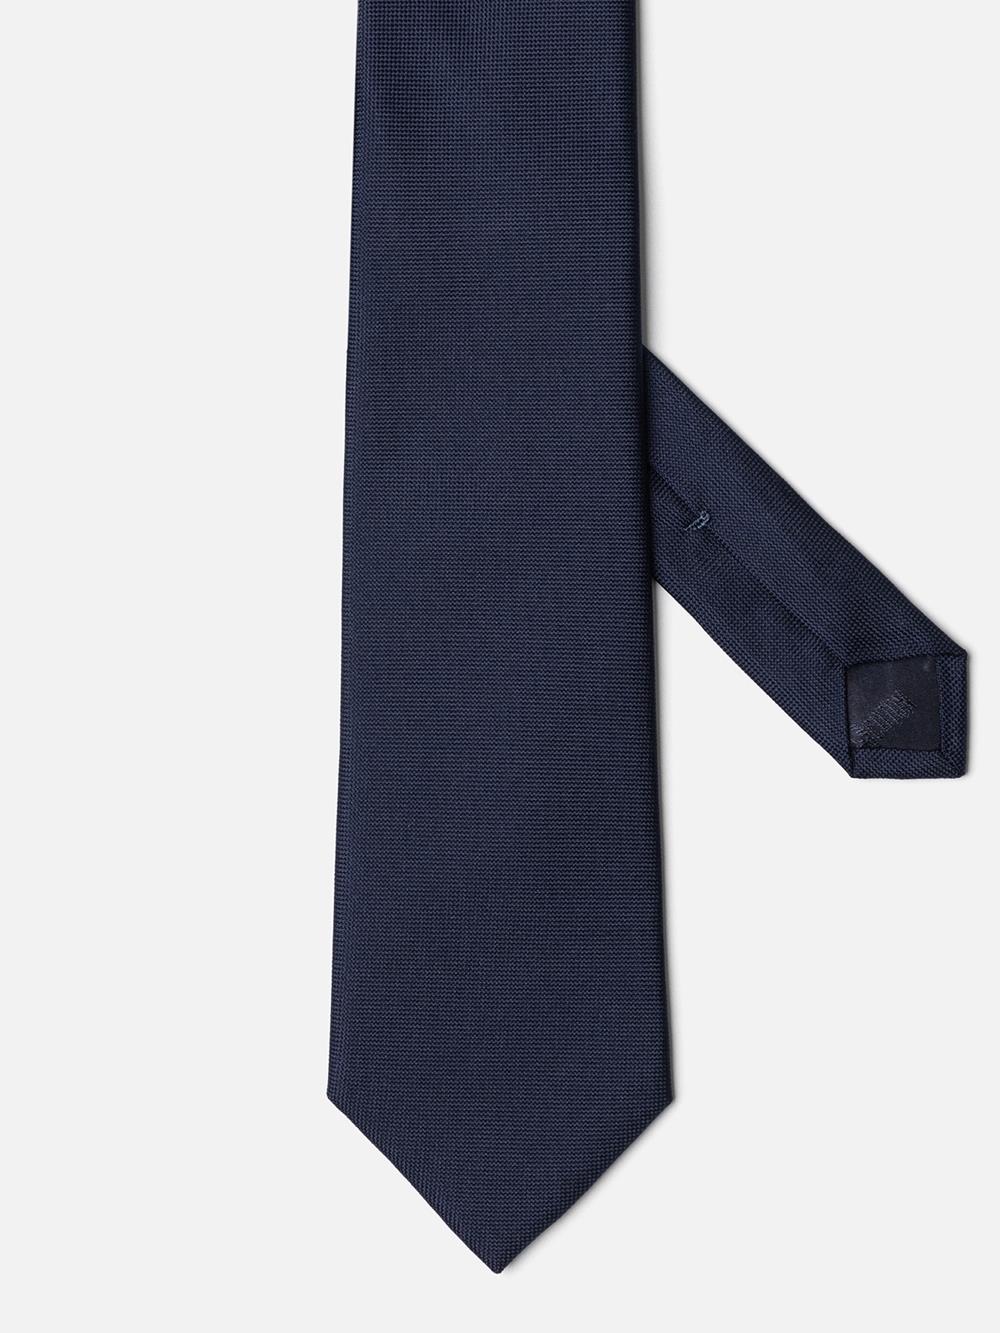 Krawatte aus mikrogeflochtener Seide in navy